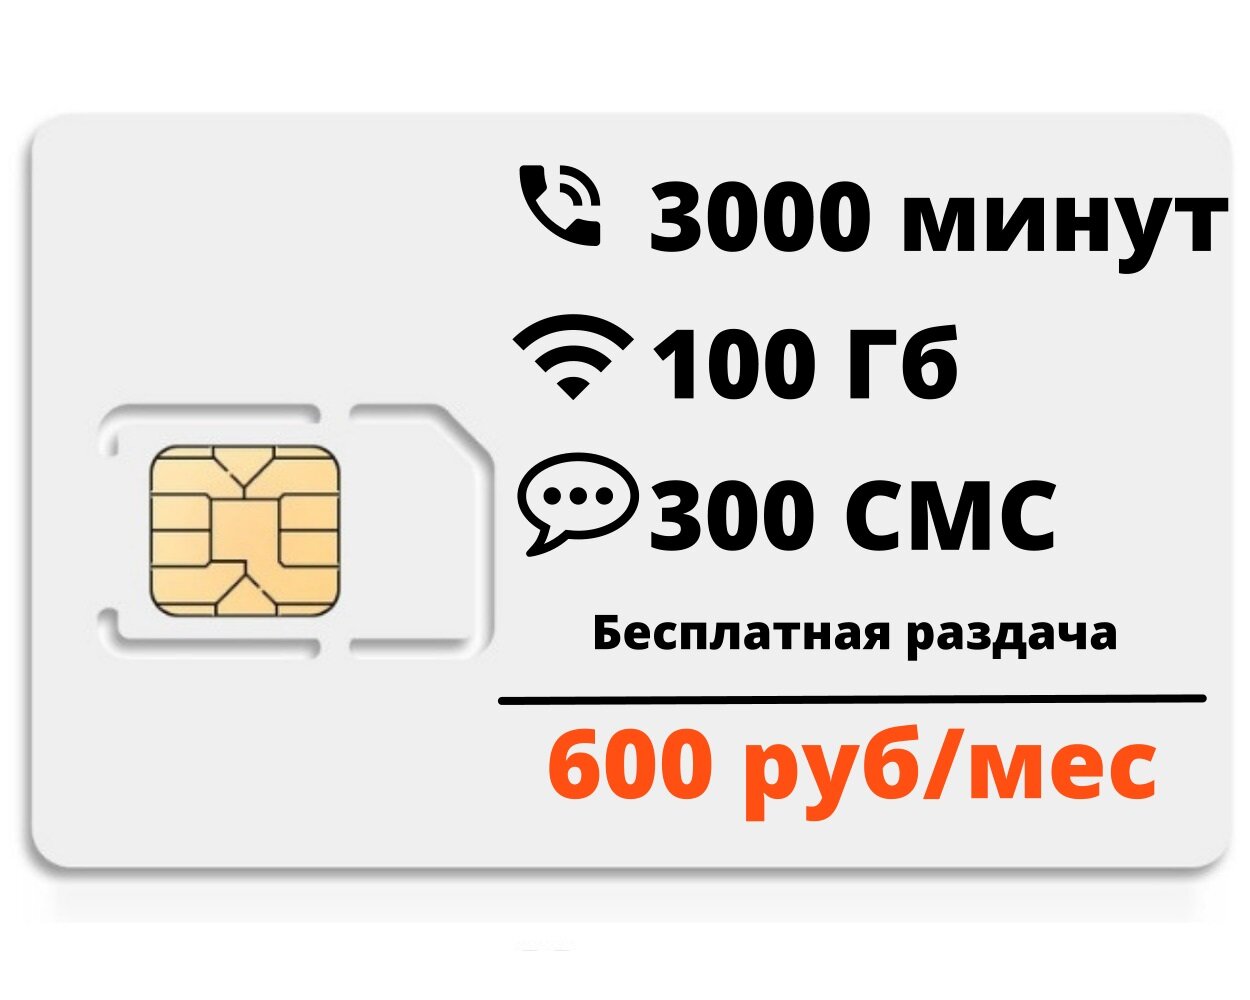 SIM-карта Ростелеком / супер тариф / 200 Гб / 3000 мин / 300 смс